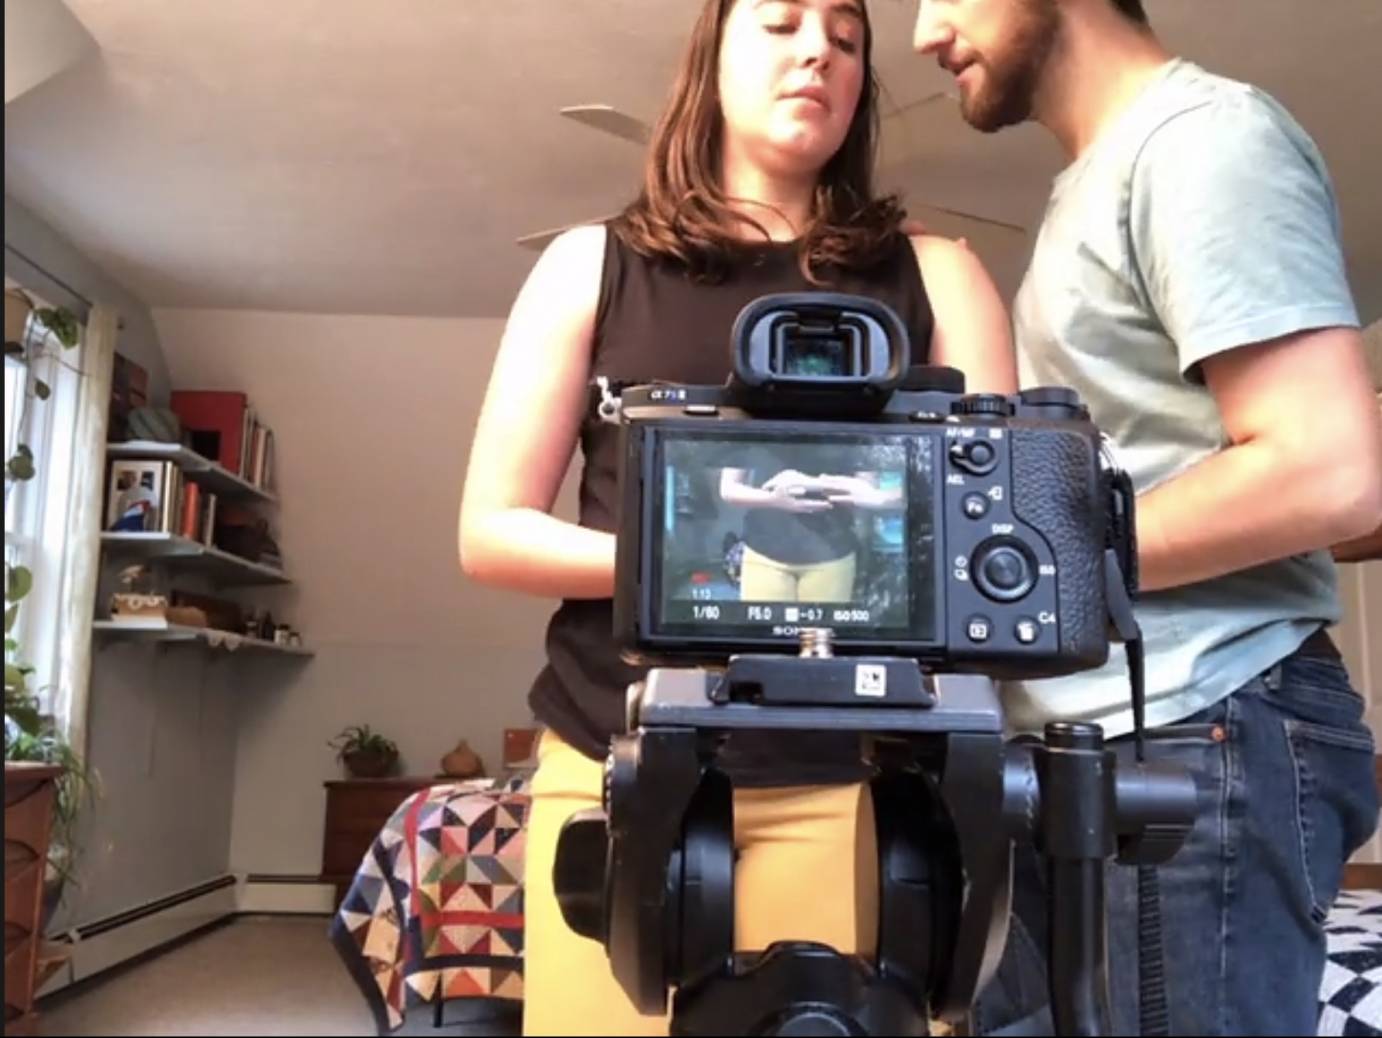 Hollis Bartlett and Nattie Trogdon look at a video recorder